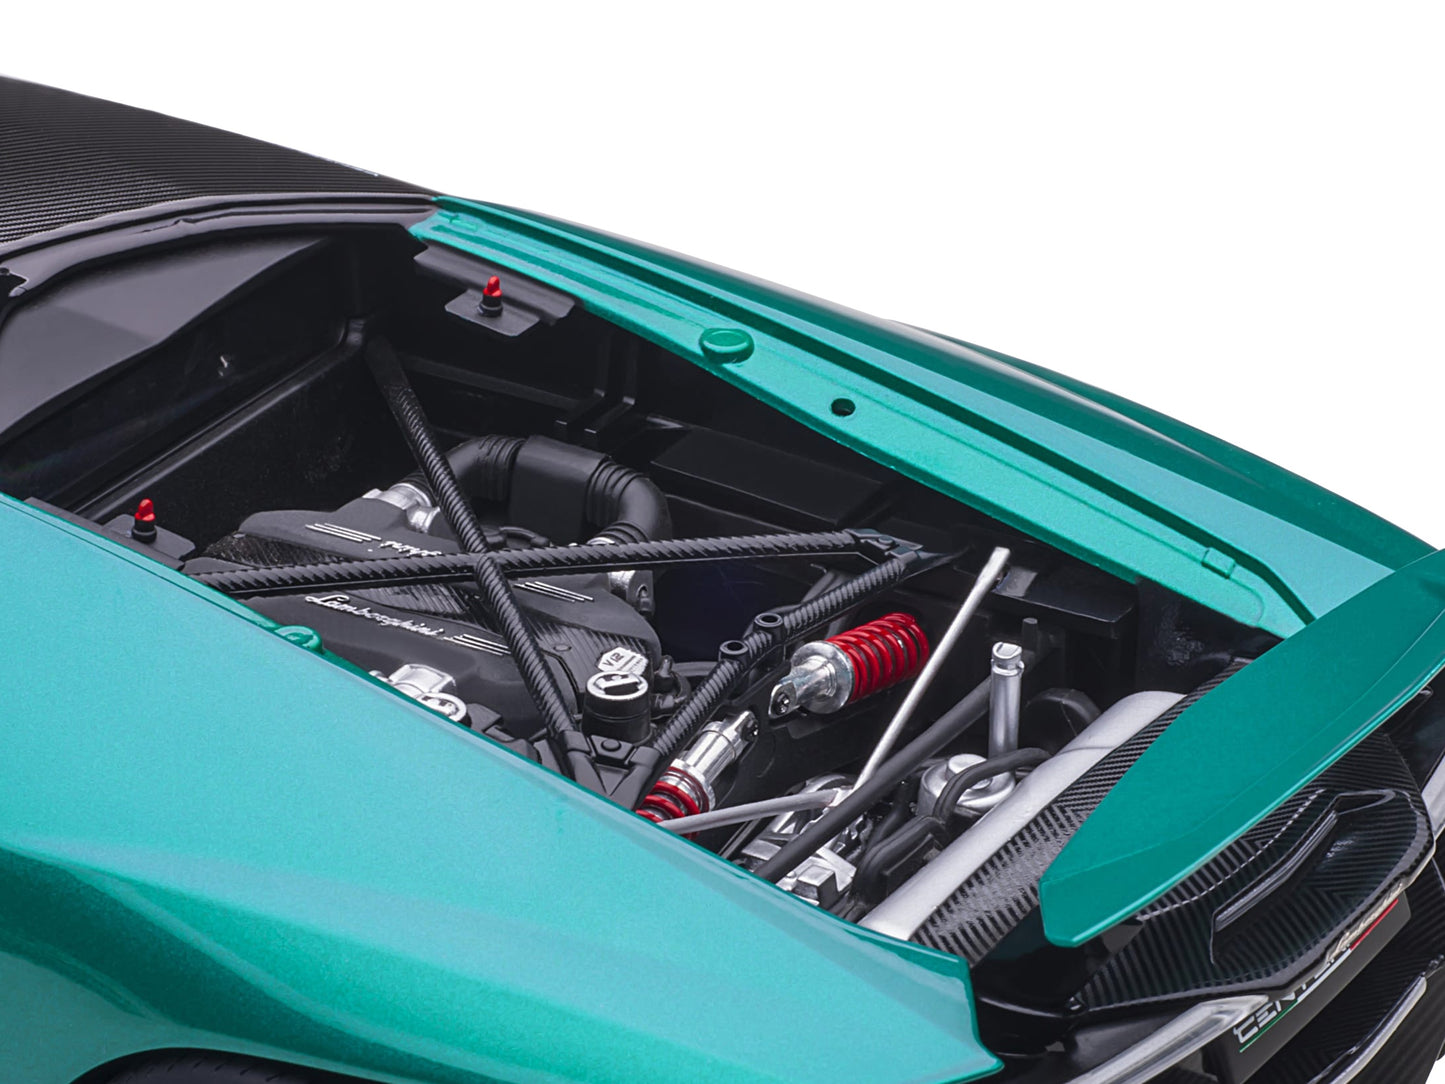 Lamborghini Centenario Verde Artemis / Green Metallic with Carbon Top 1/18 Model Car by Autoart